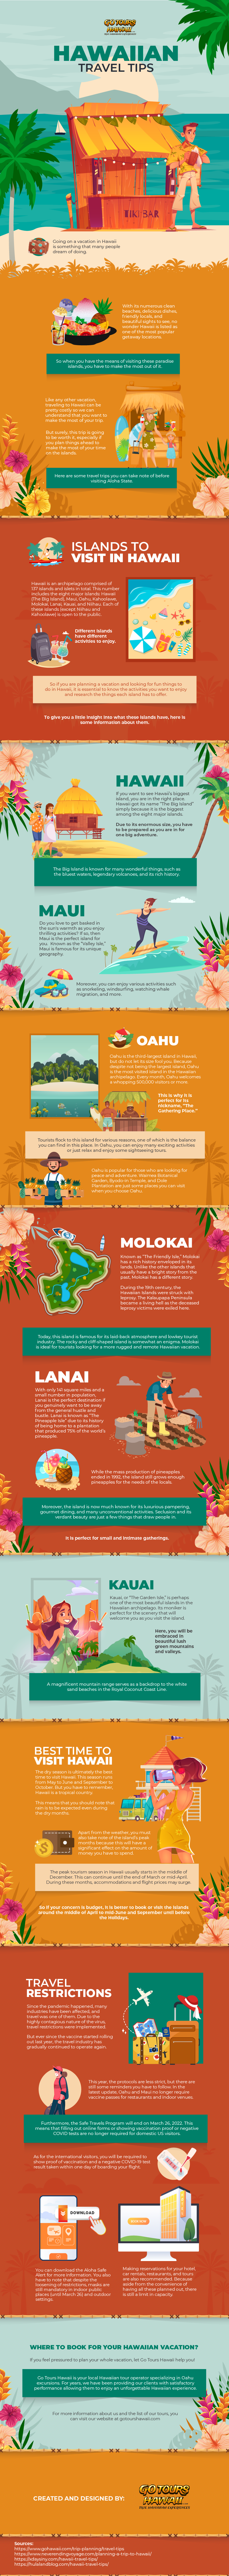 Hawaiian Travel Tips - Infographic ImageW652OFE